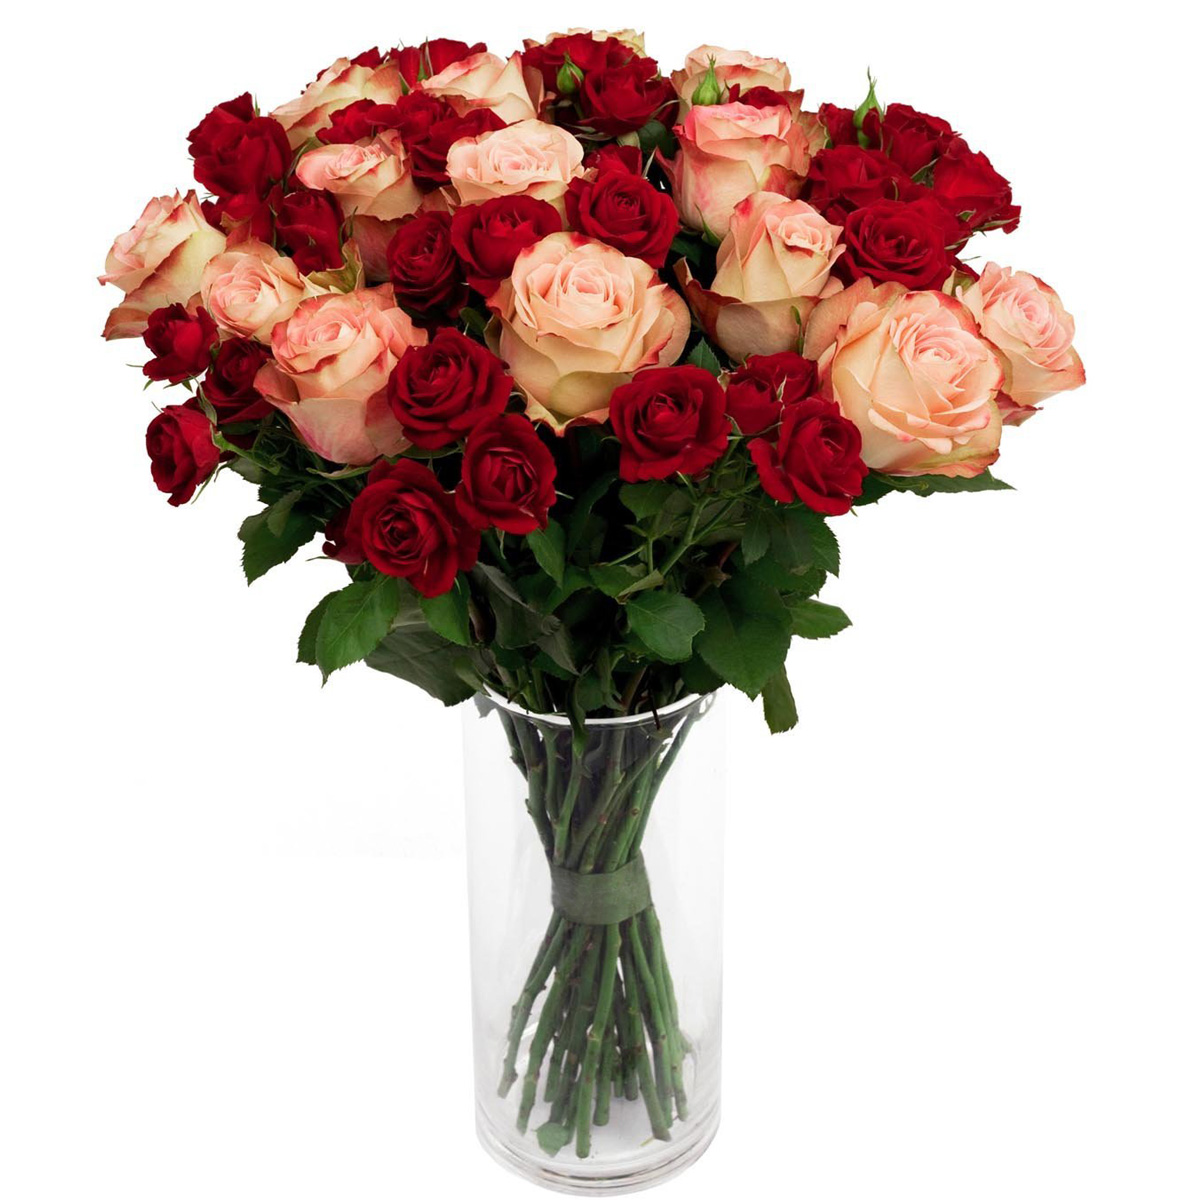 red-and-orange-roses-in-vase